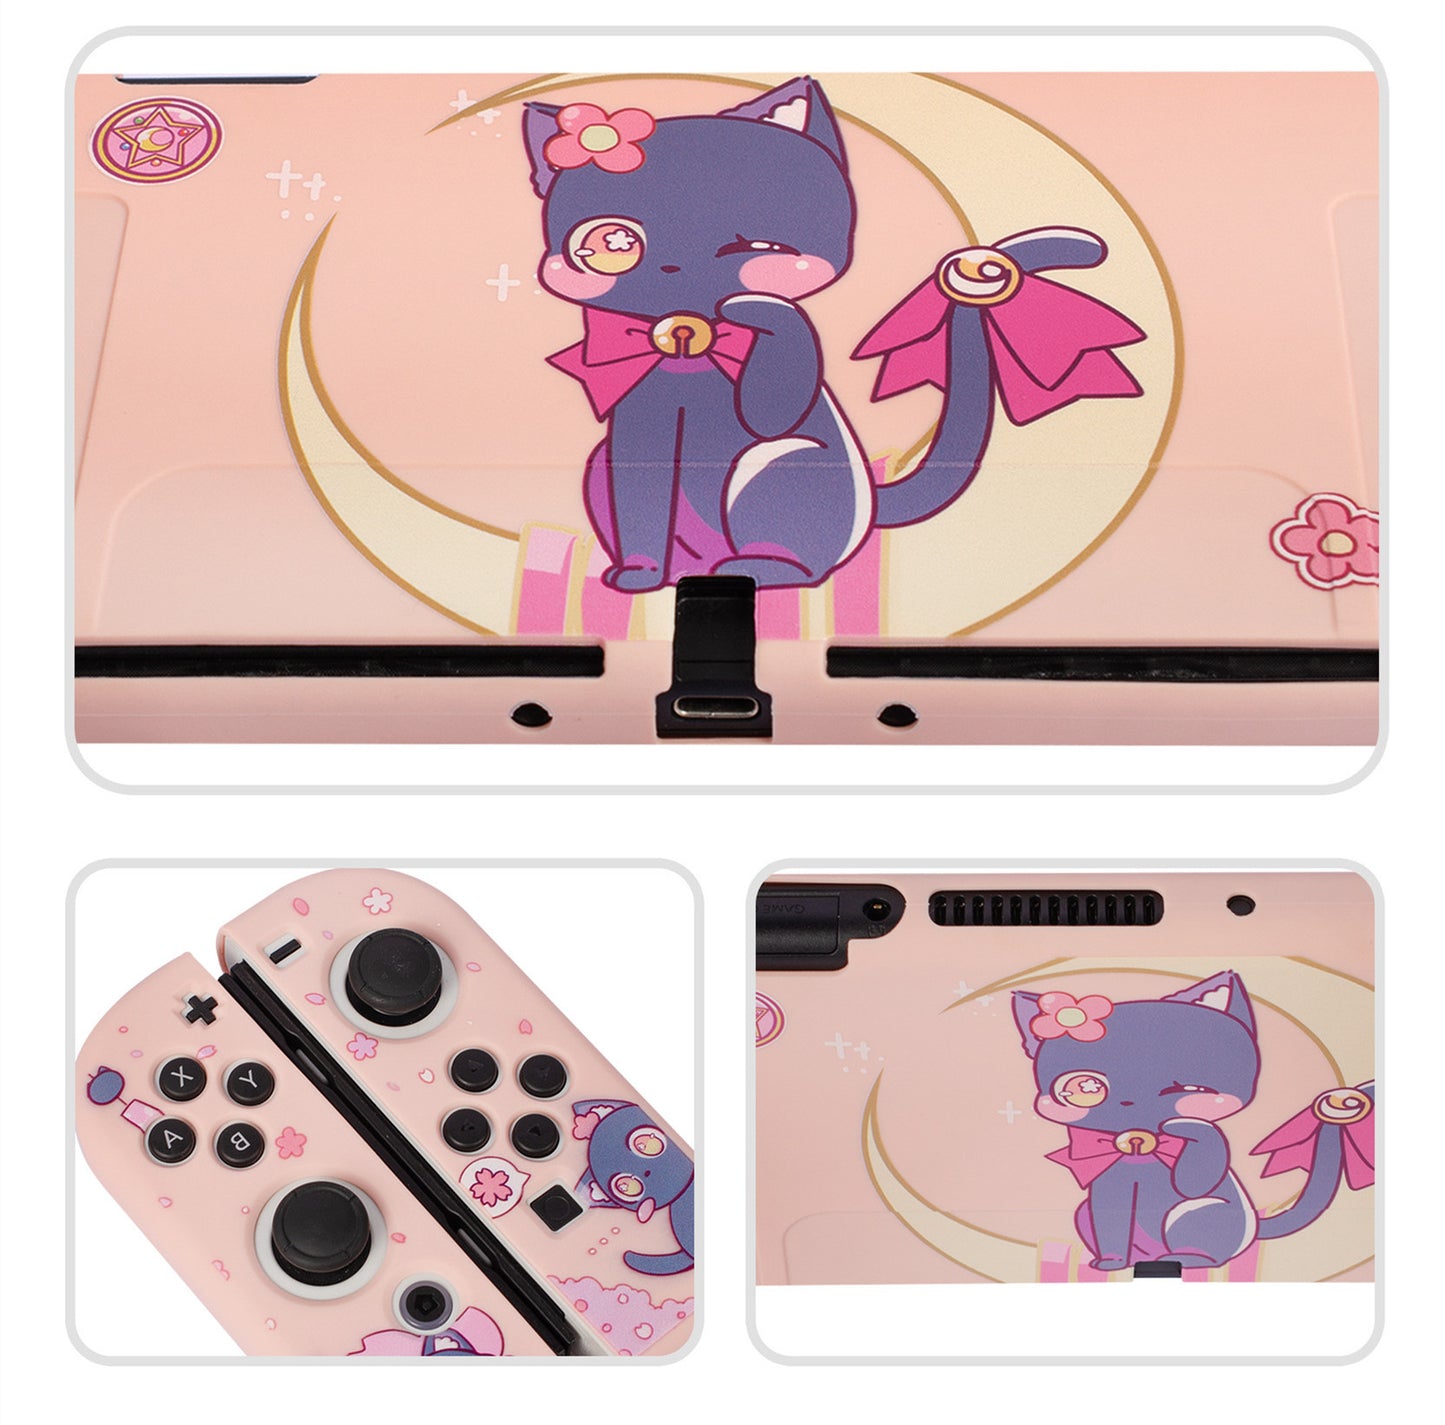 Moon Black Cat Cartoon Game Console